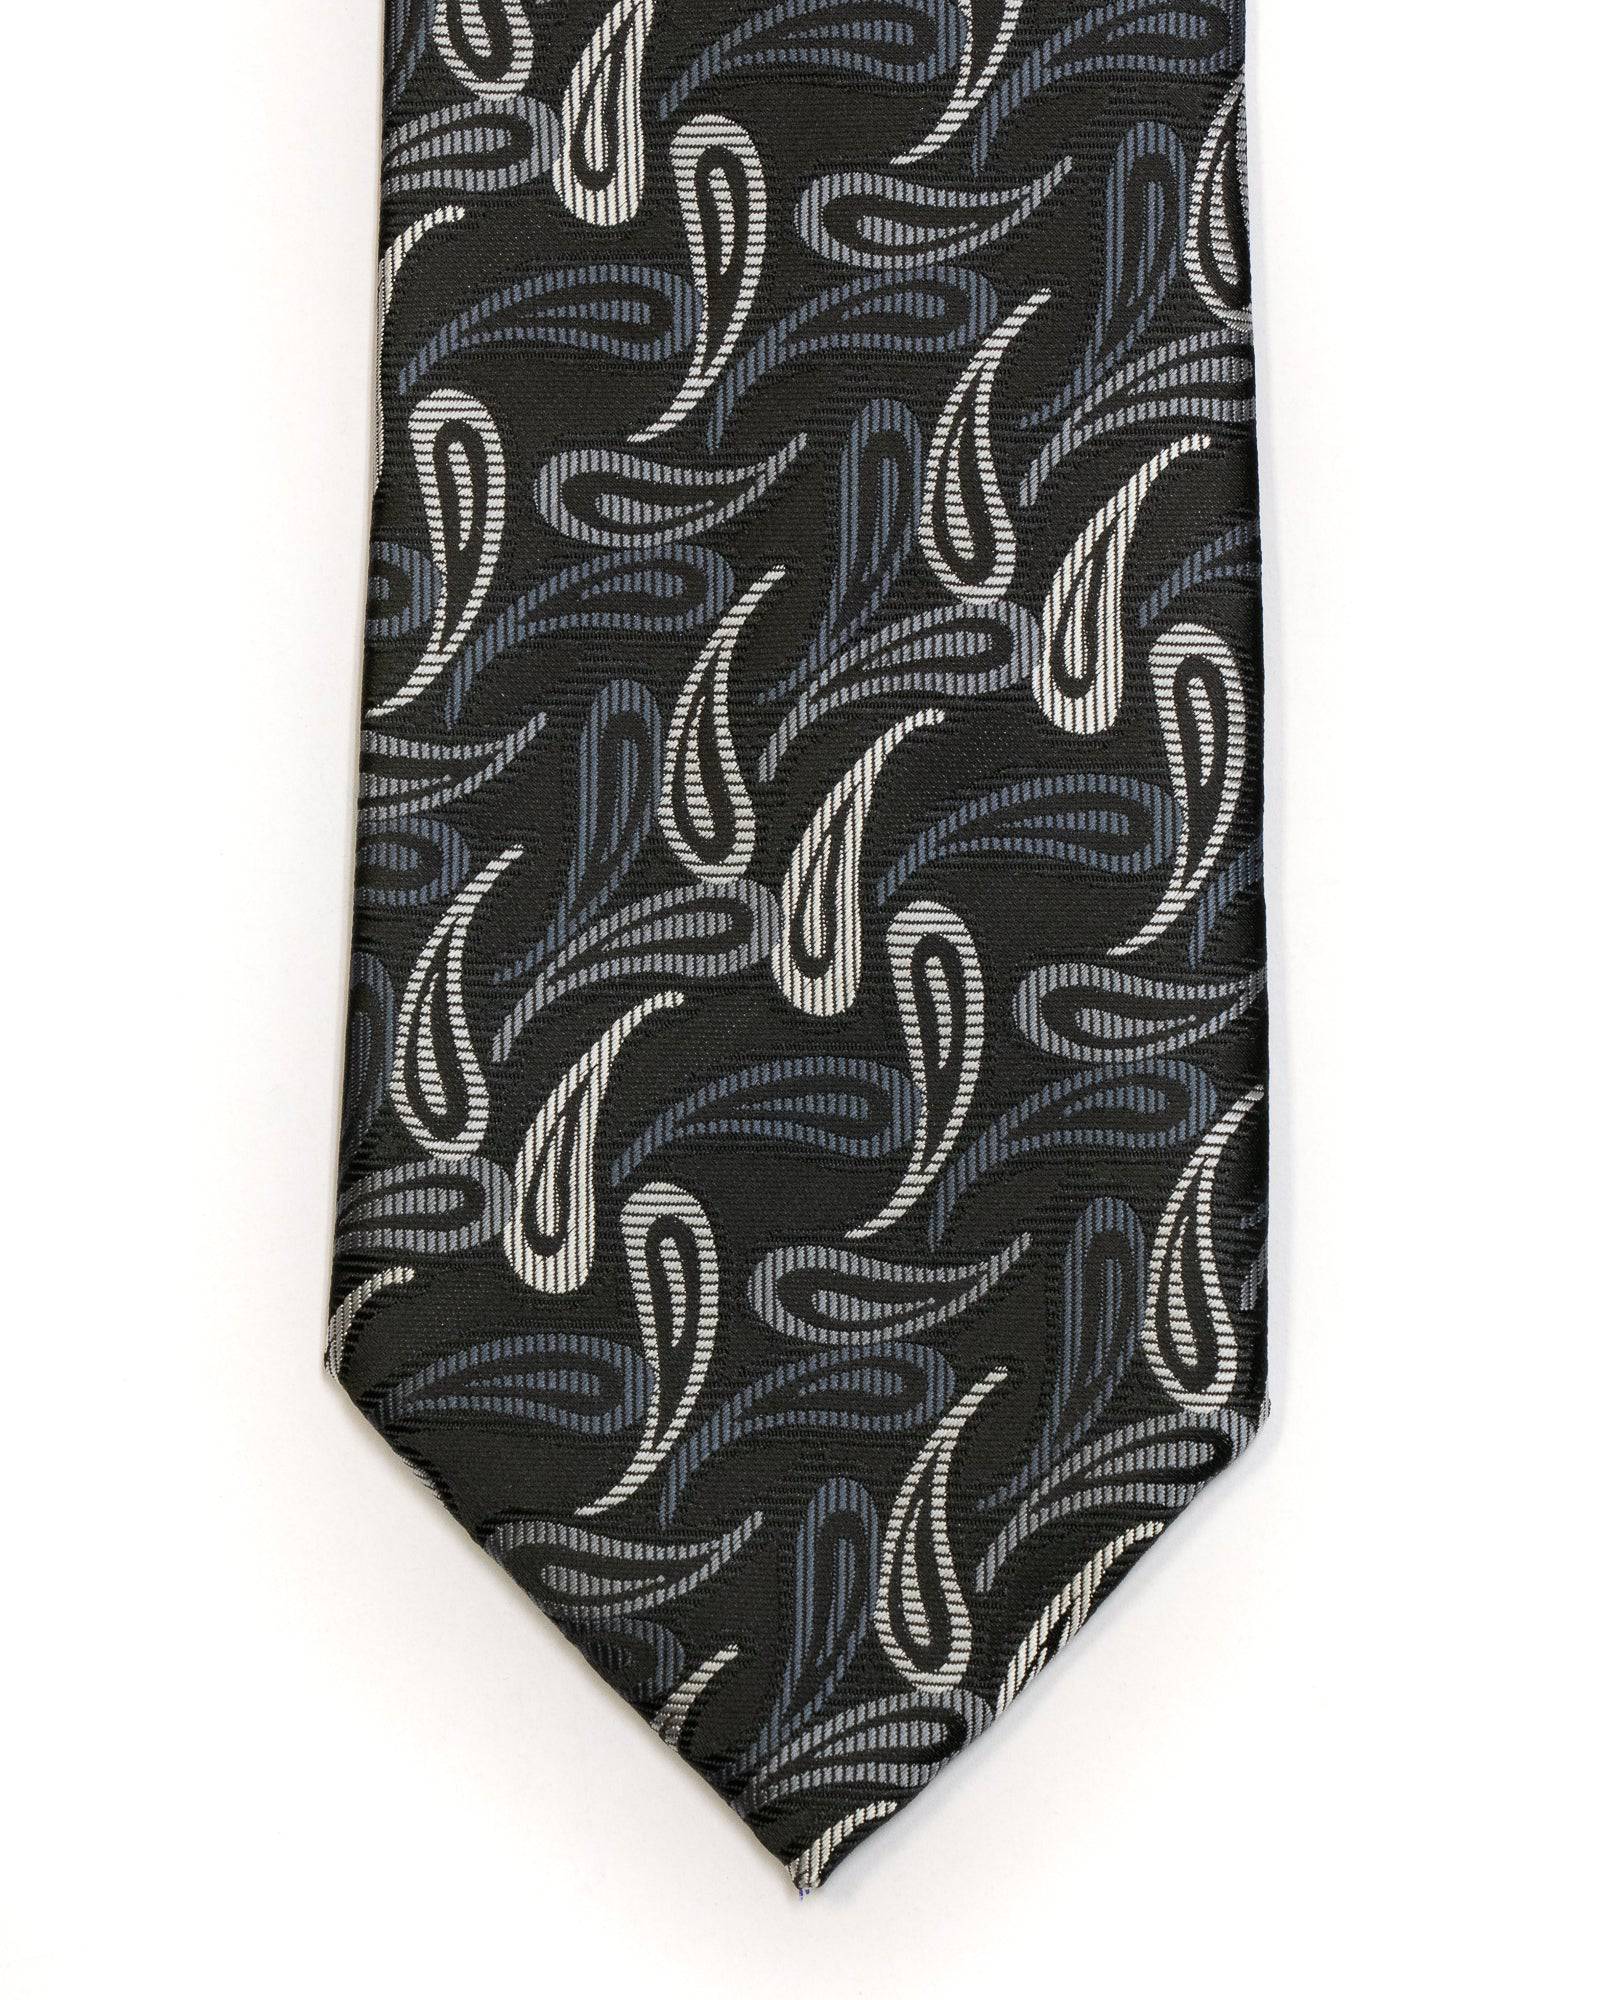 Gianfranco Paisley Tie in Black with Grey - Rainwater's Men's Clothing and Tuxedo Rental